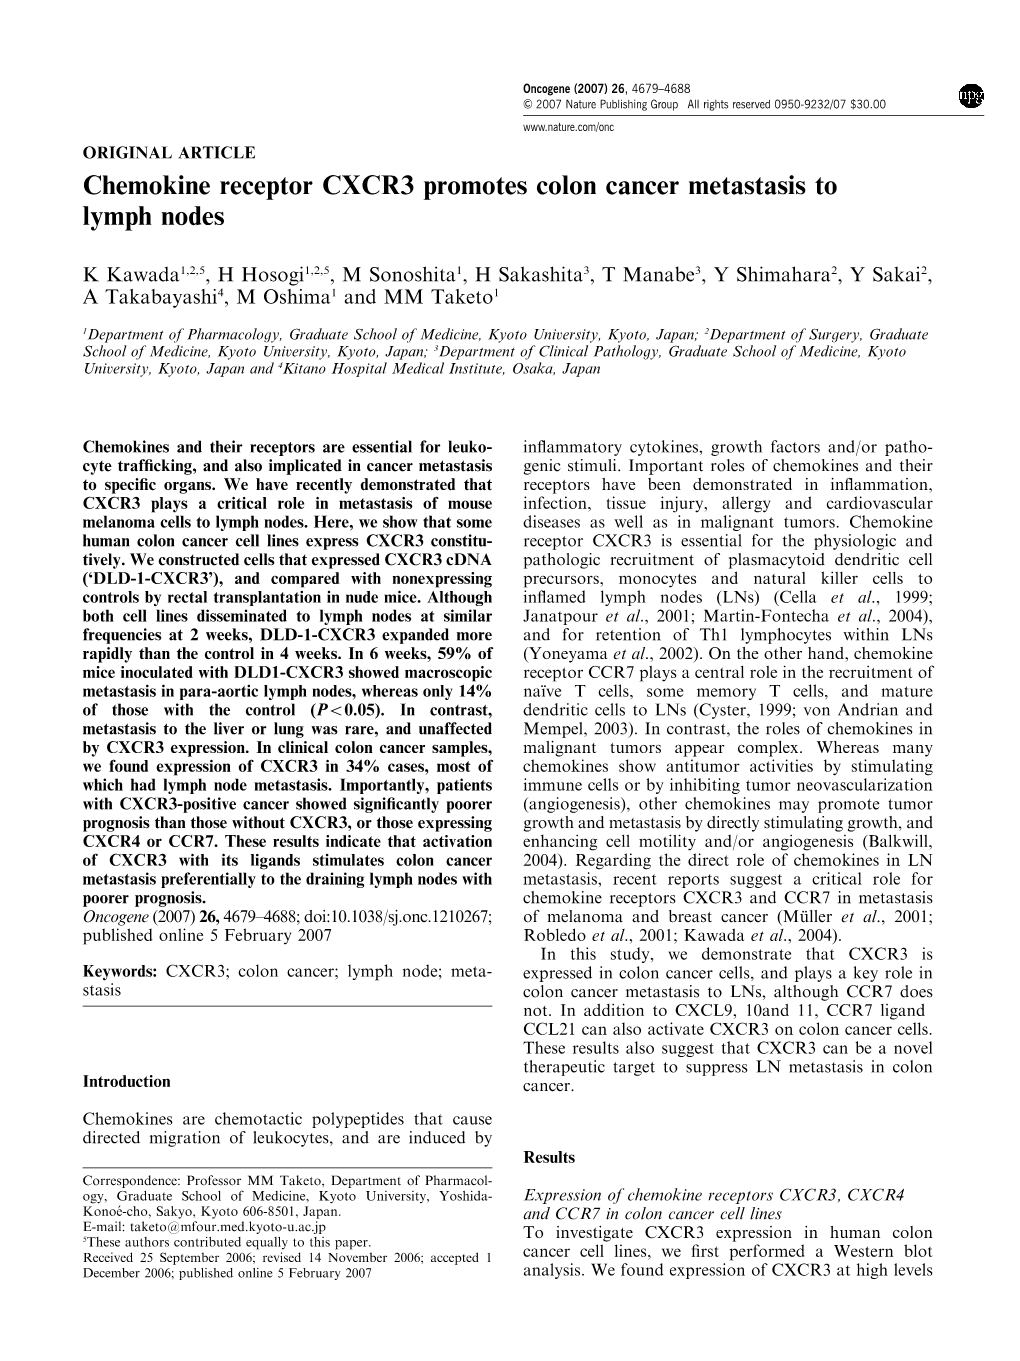 Chemokine Receptor CXCR3 Promotes Colon Cancer Metastasis to Lymph Nodes